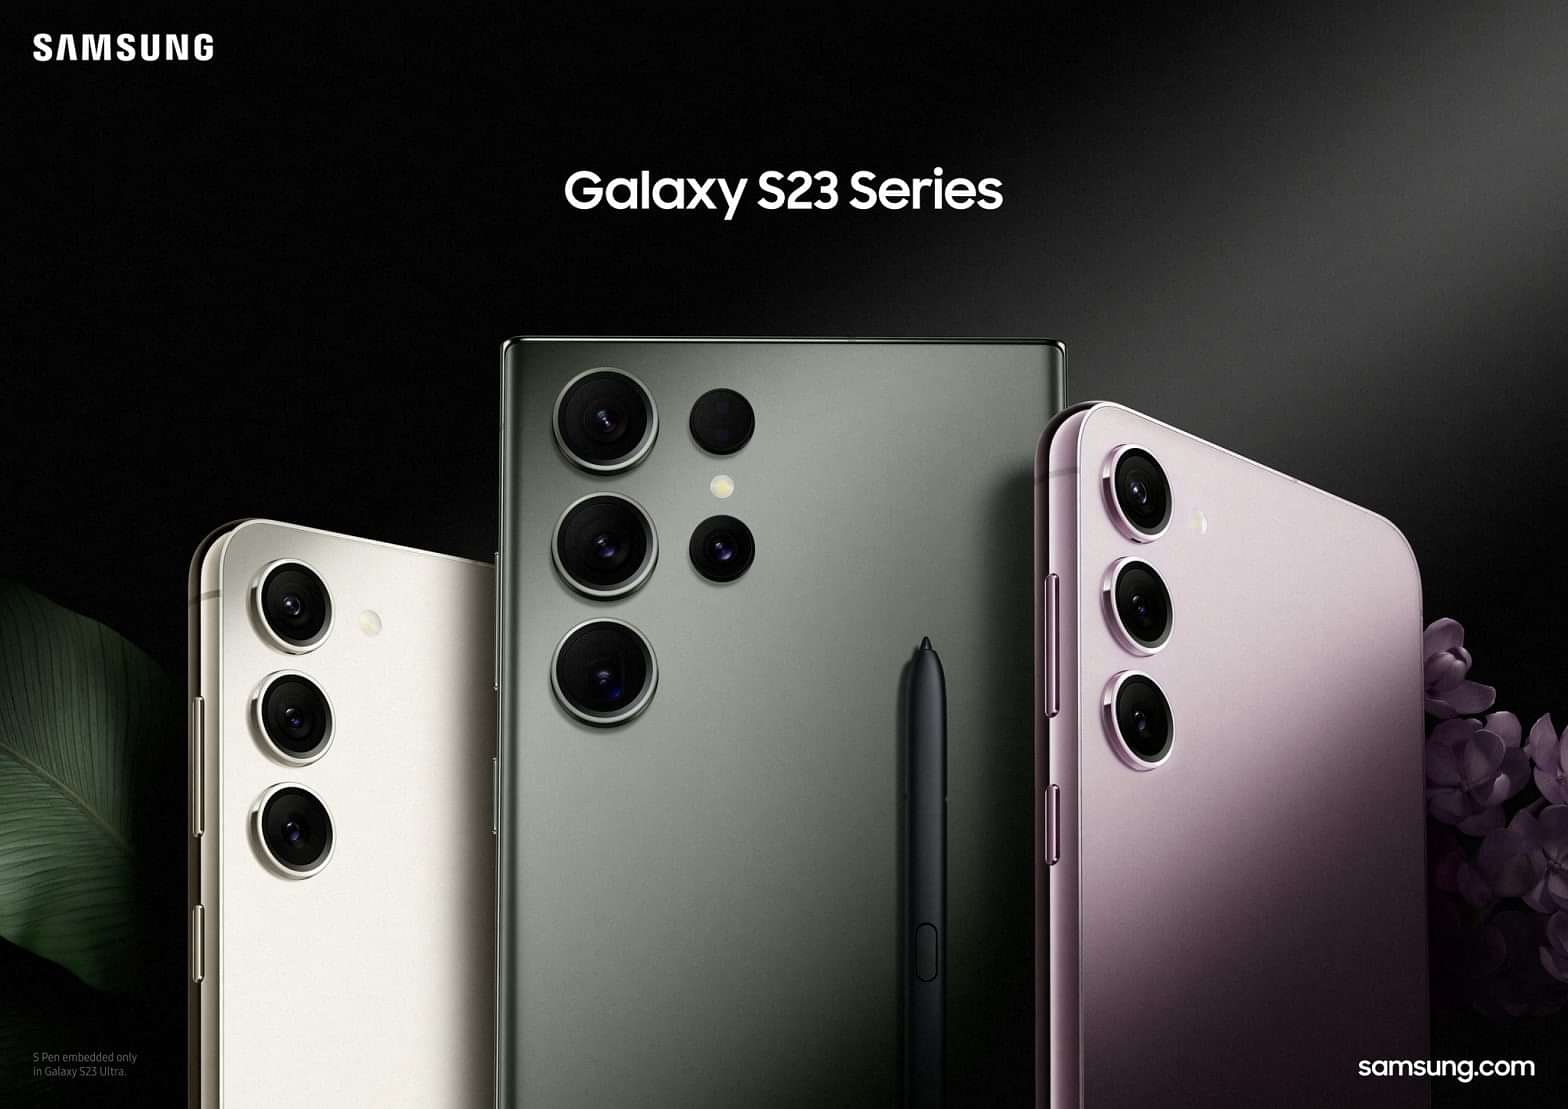 【#Samsung Galaxy S23系列新品列陣！一文睇晒詳盡規格同升級位】
今日凌晨嘅Samsung新機發佈會，為大家帶嚟全新Galaxy S23系列一共3款旗艦新機，一次過滿足晒Fans唔同需求！當中最觸目梗係Galaxy S23